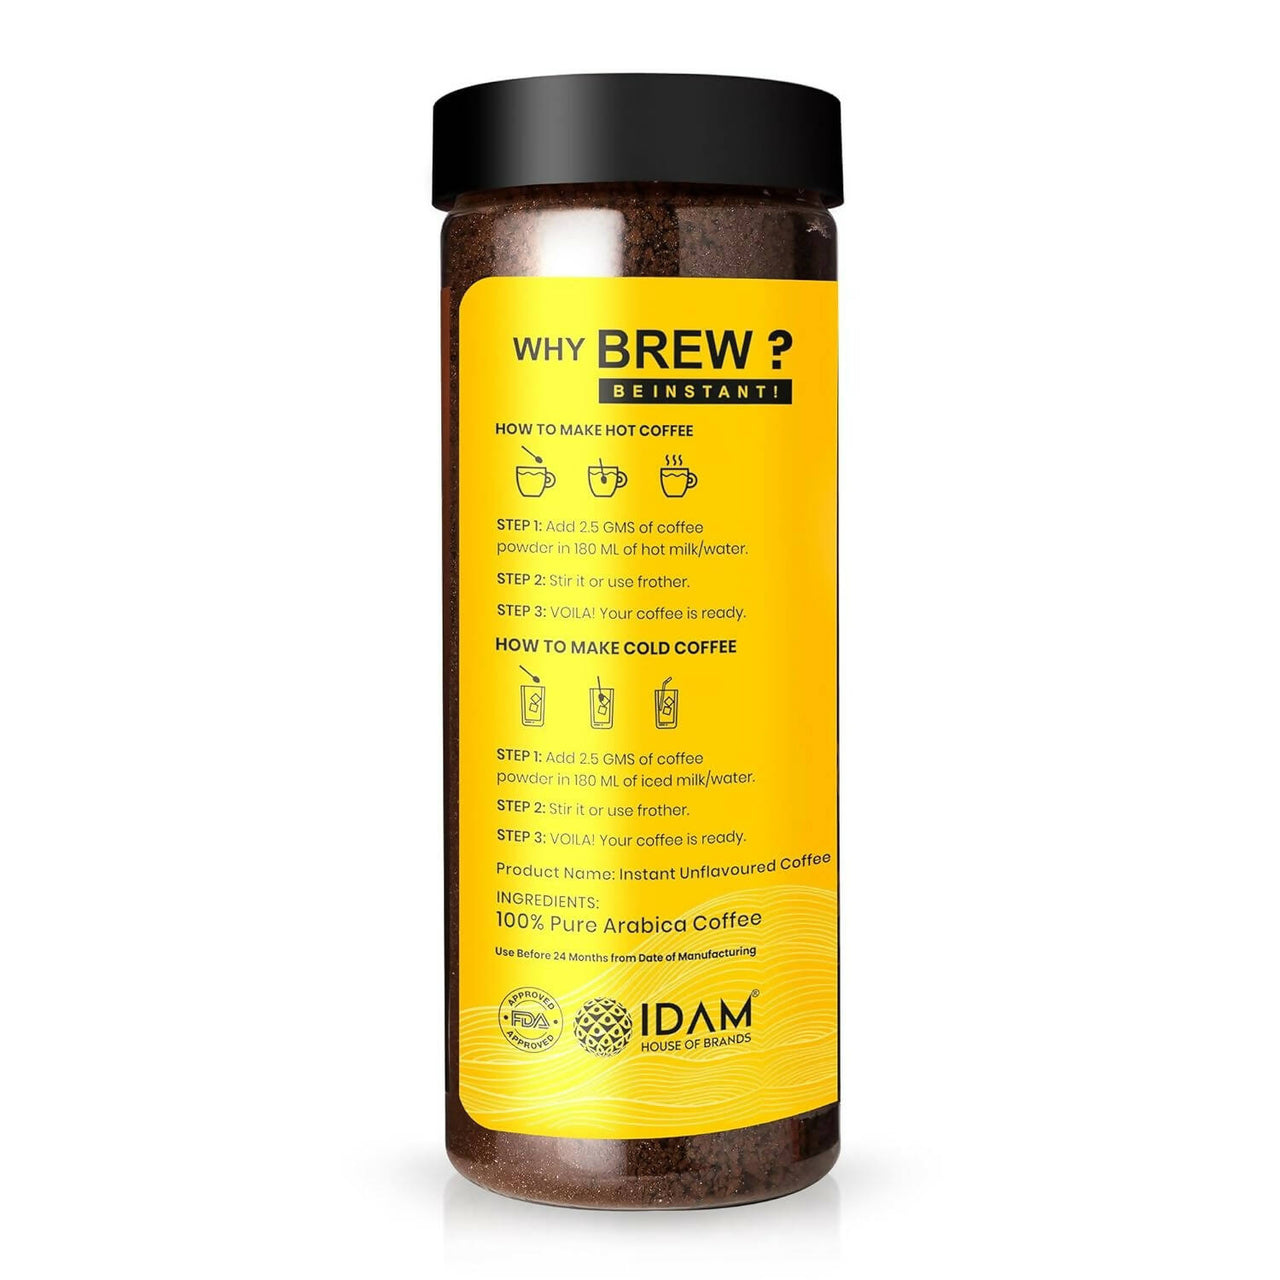 Bevzilla Premium Hazelnut Coffee Powder 100% Arabica - Distacart